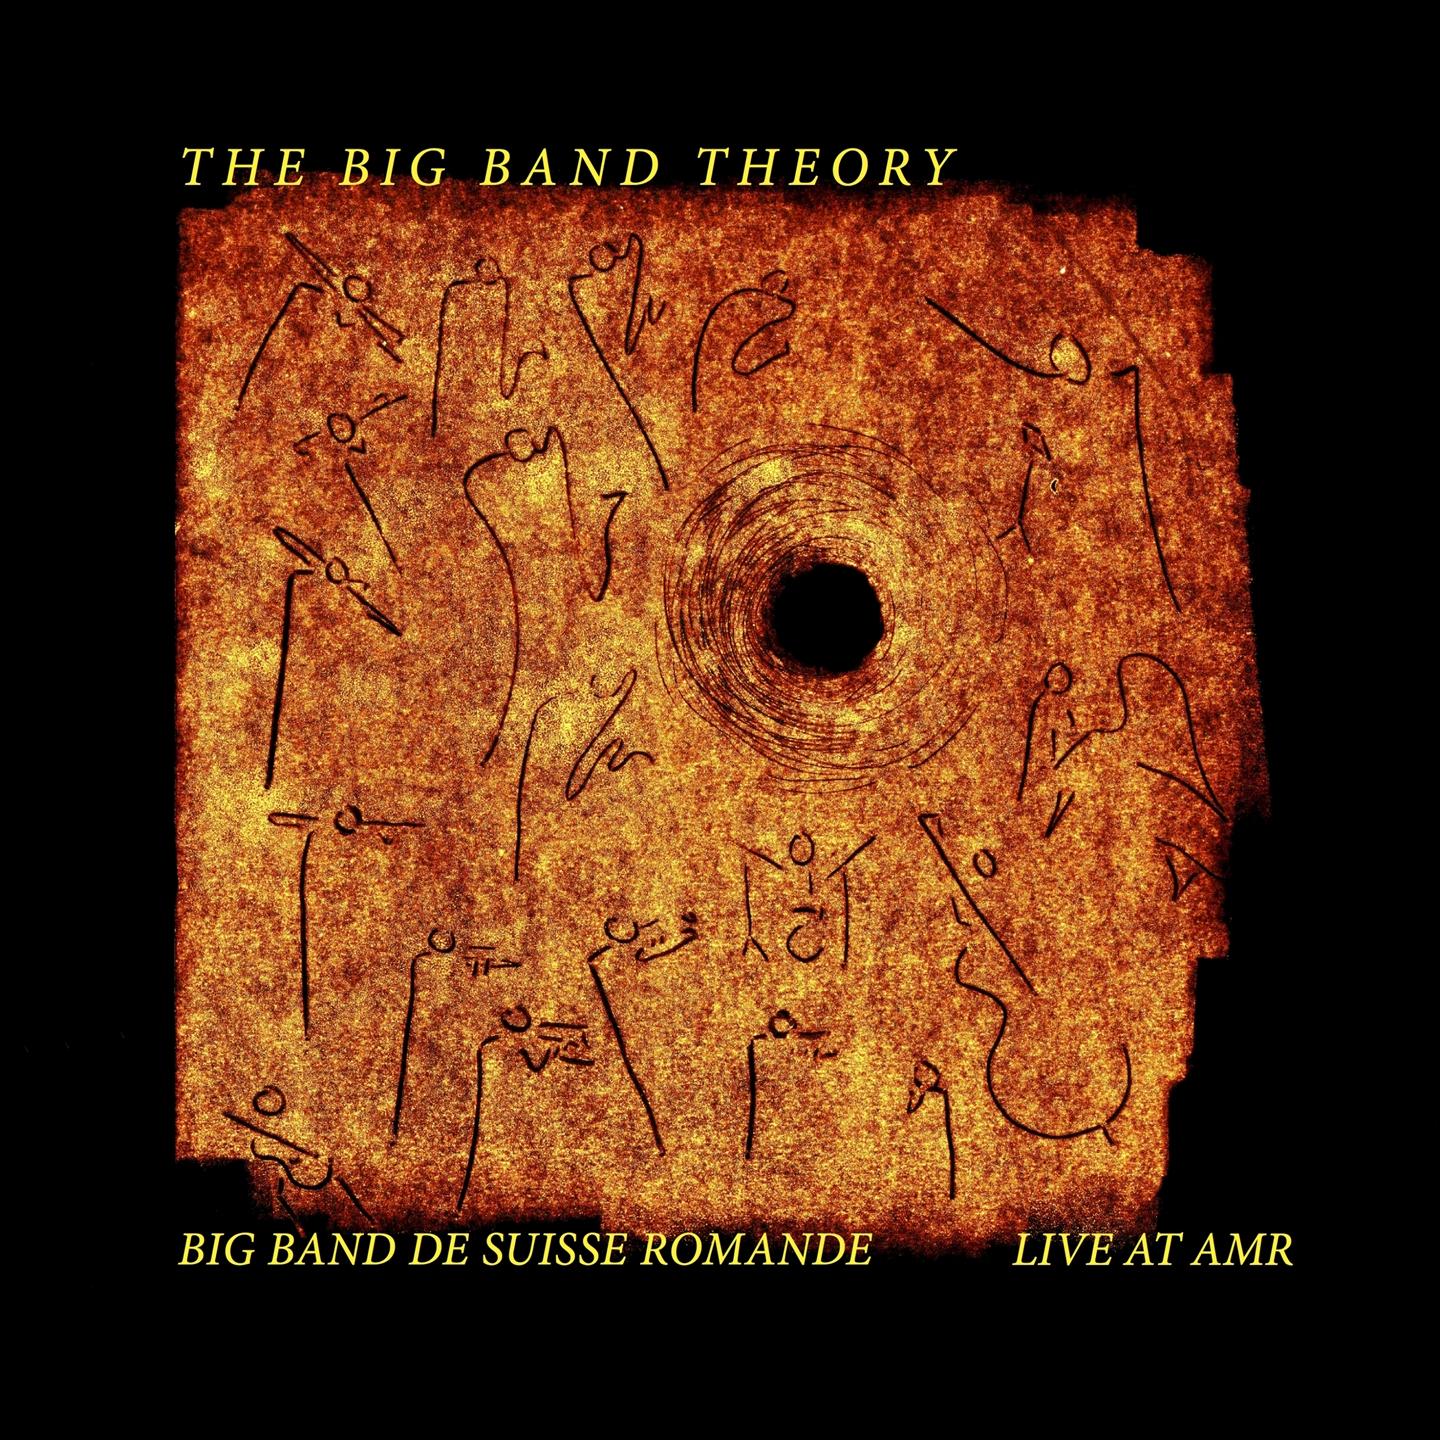 Big Band De Suisse Romande - The Big Band Theory - Photo 1 sur 1